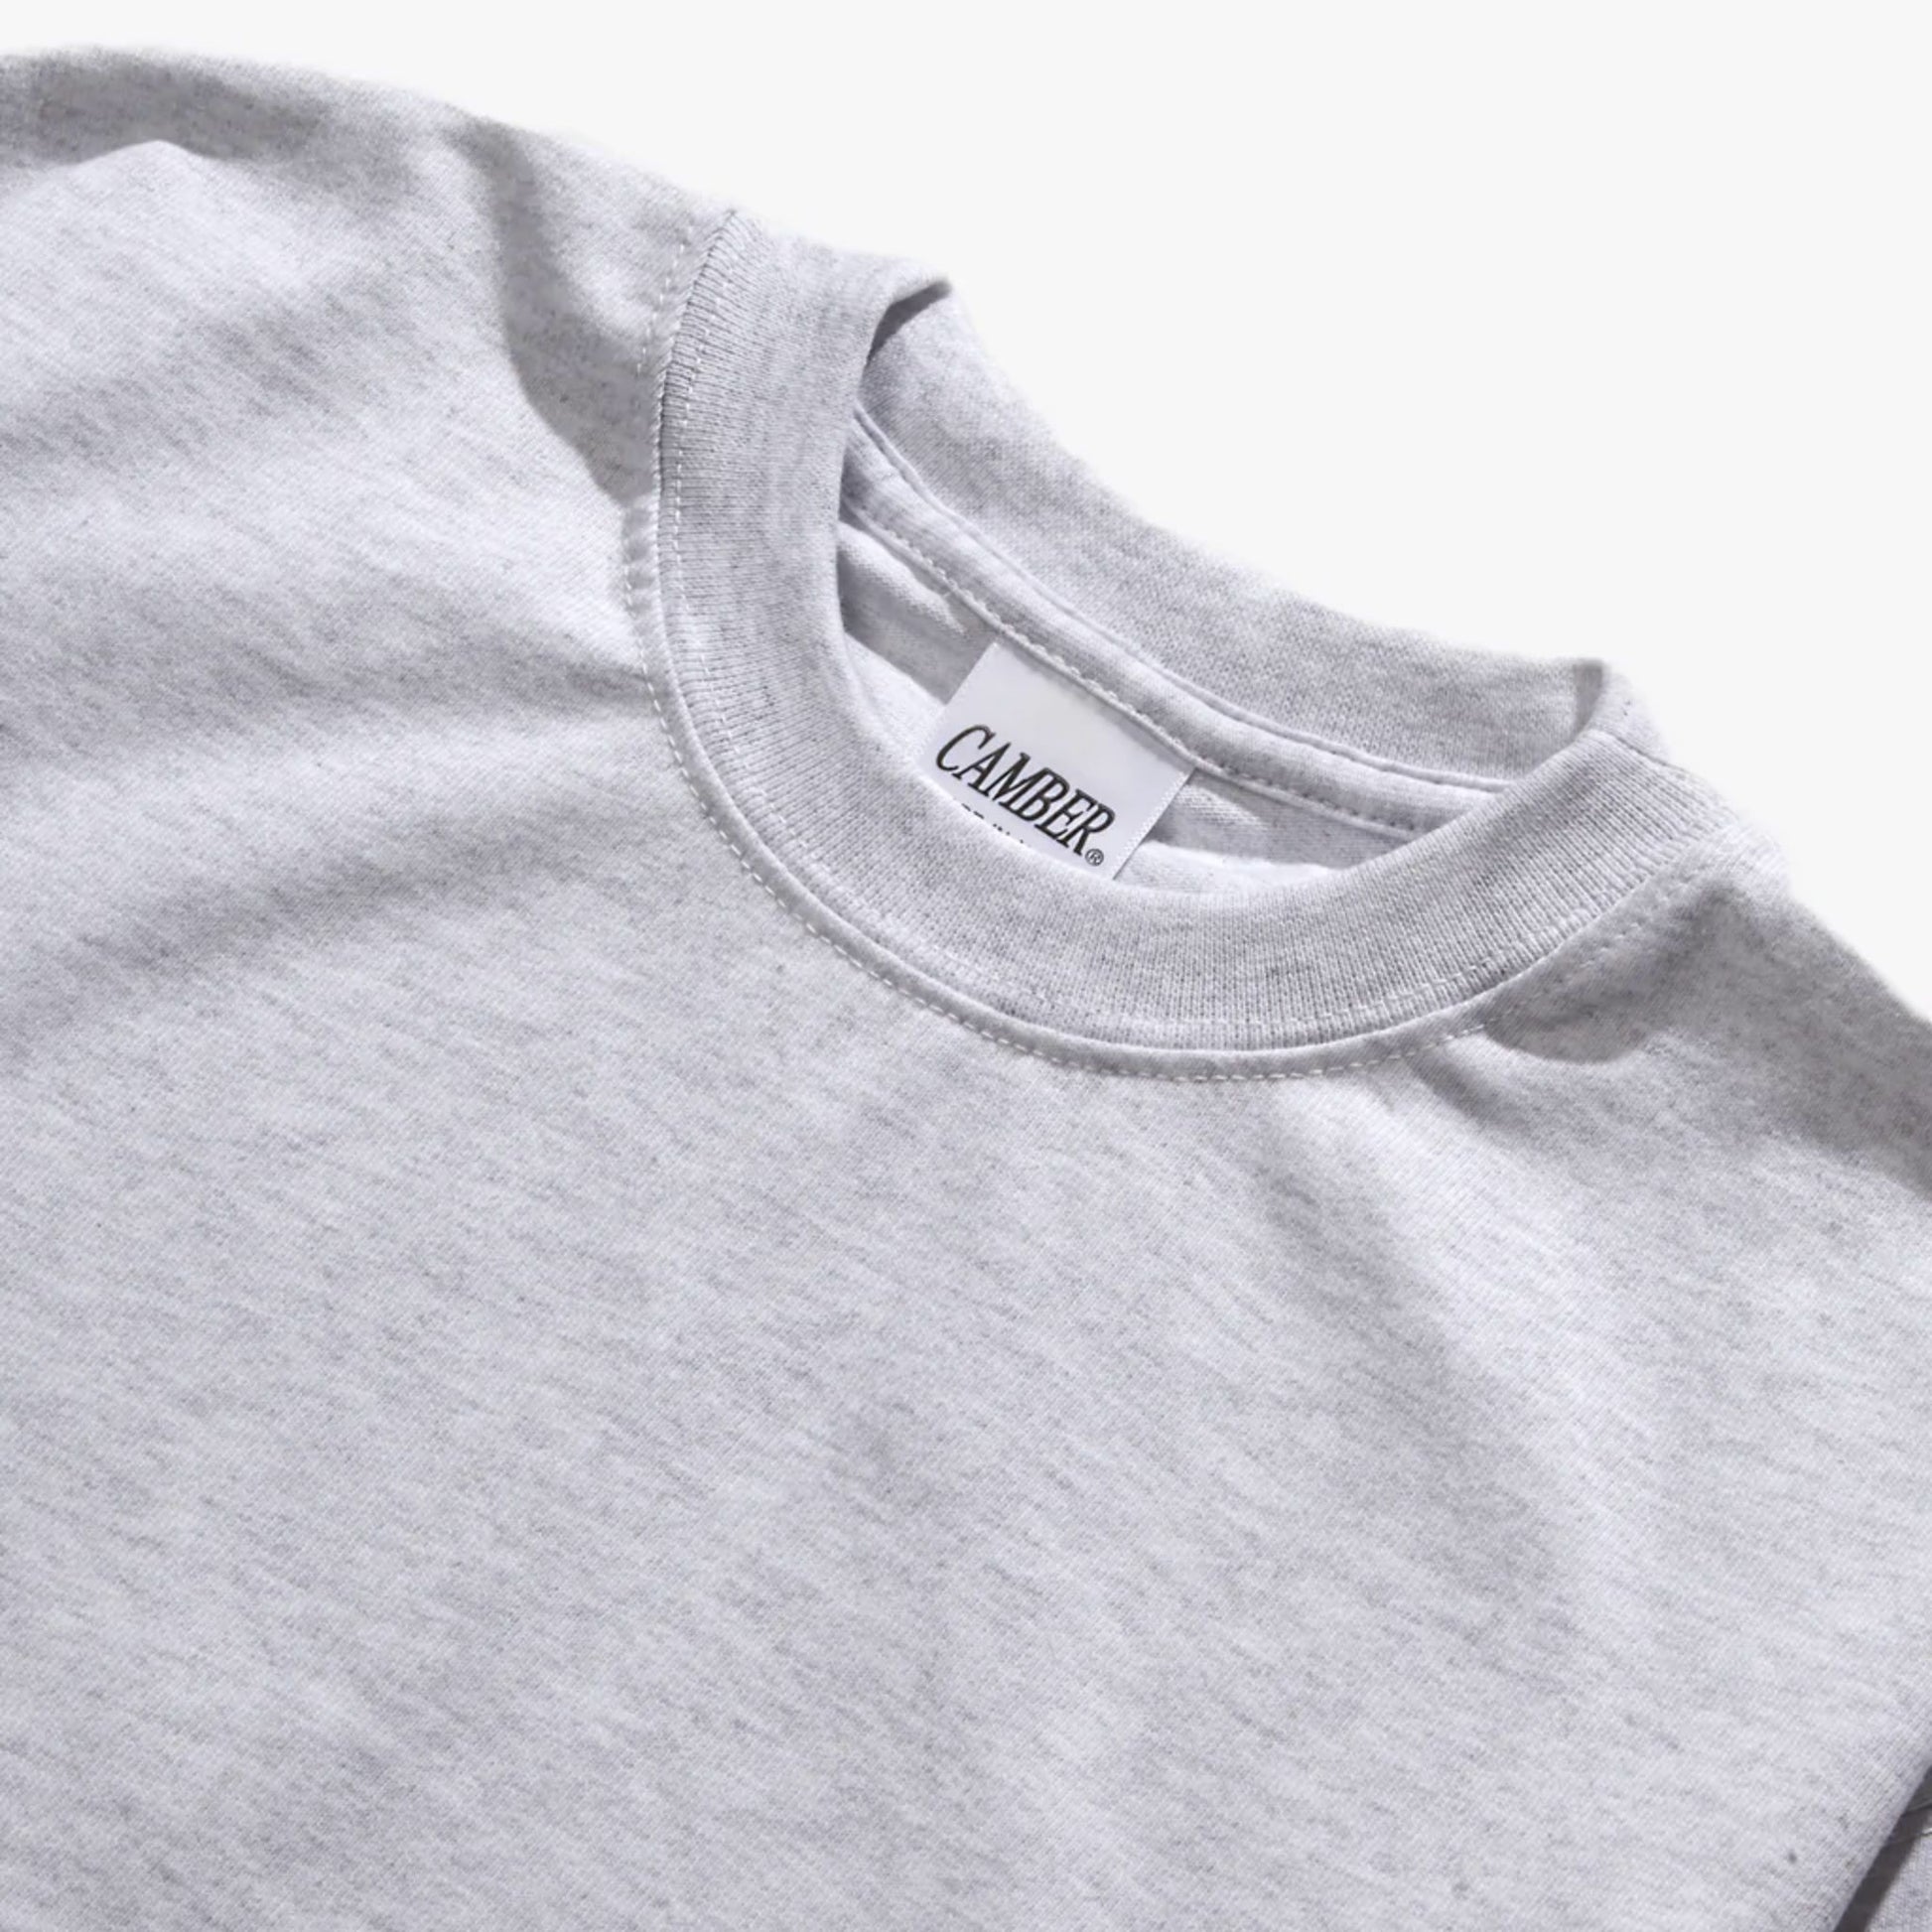 CAMBER USA - Binario09 Finest – T-Shirt 6OZ Grey